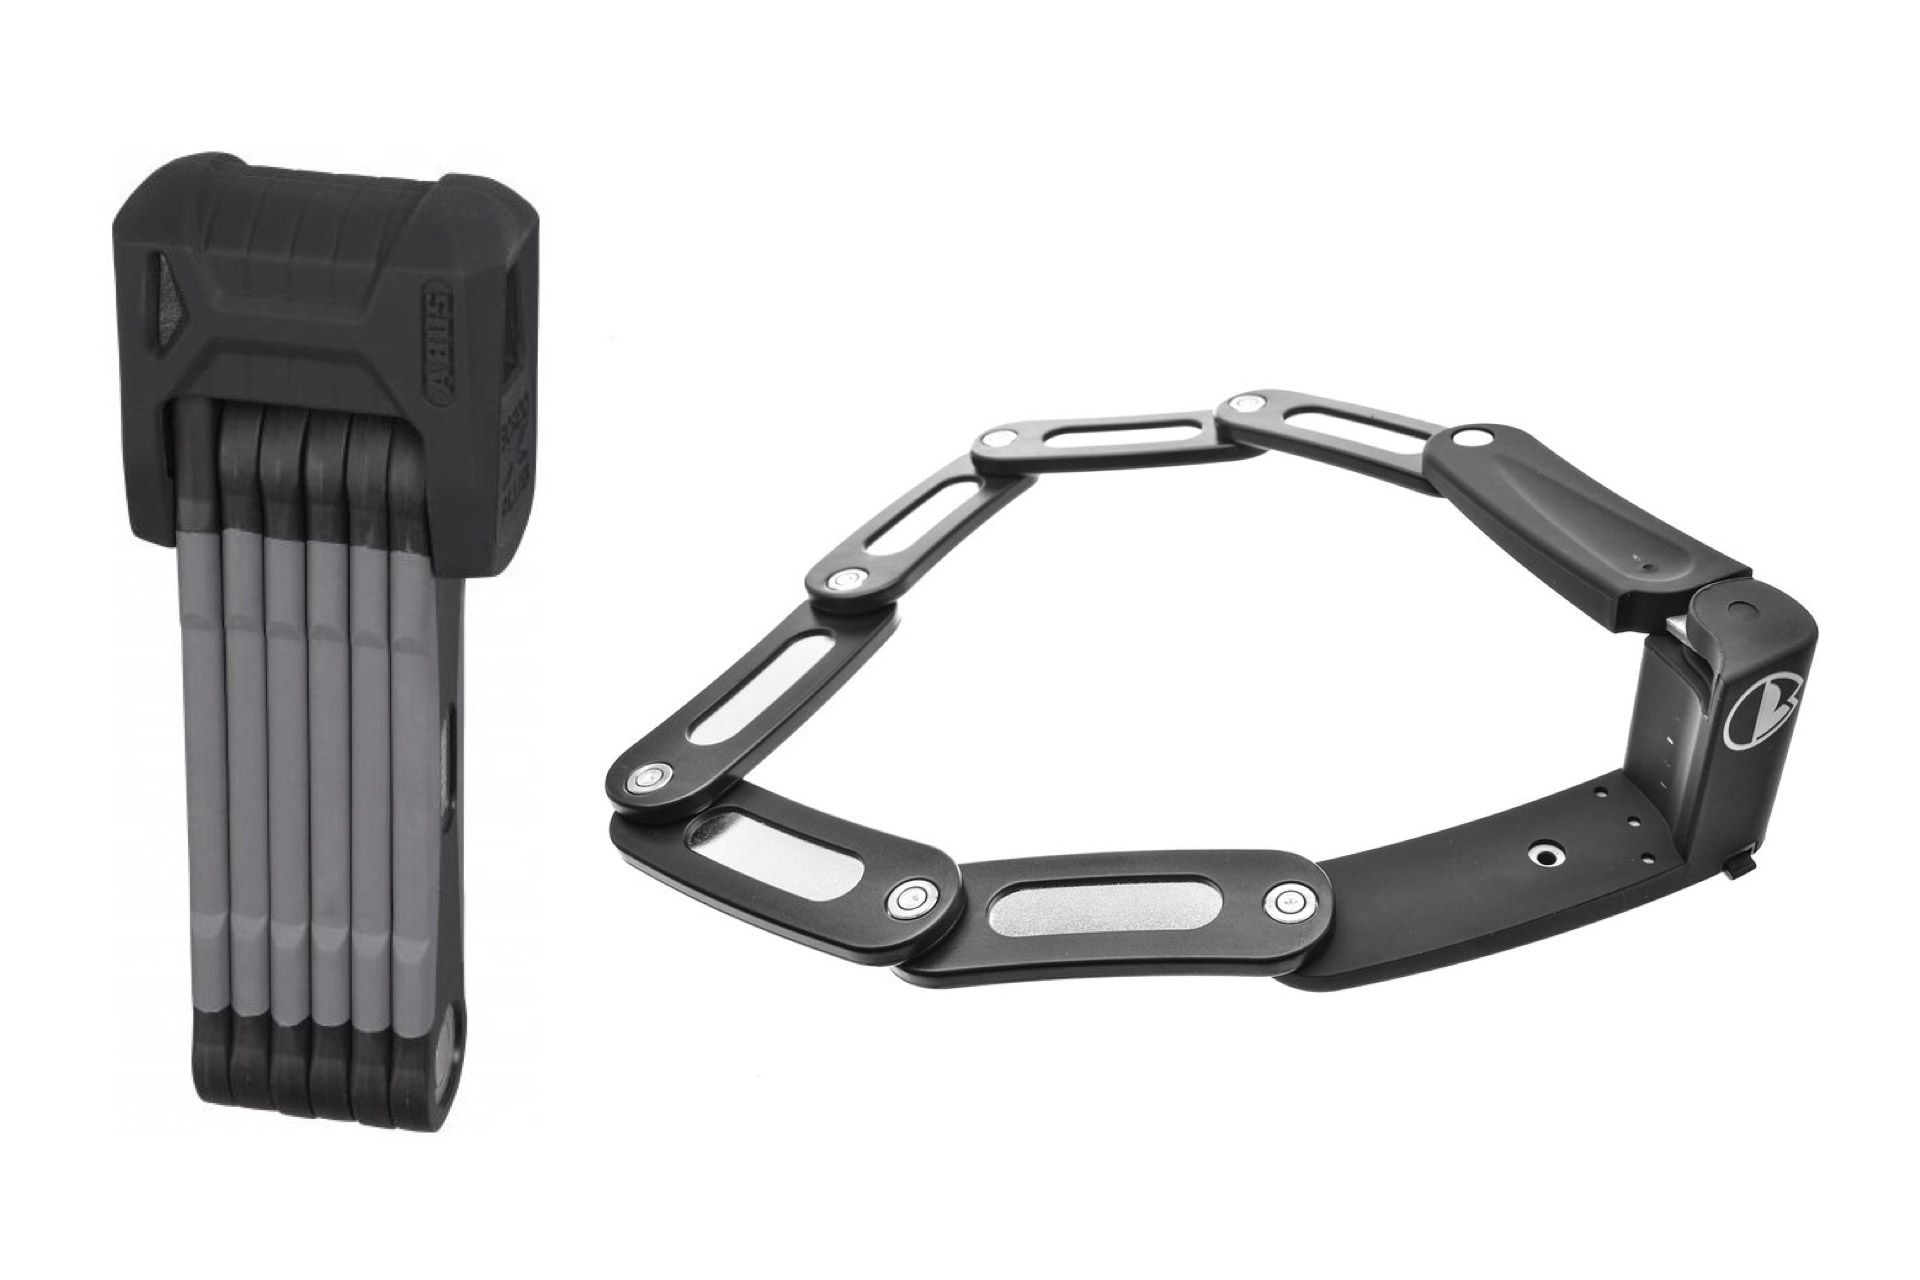 Chain Lock Round with key level 15 Designer Folding Lock with Bracket: